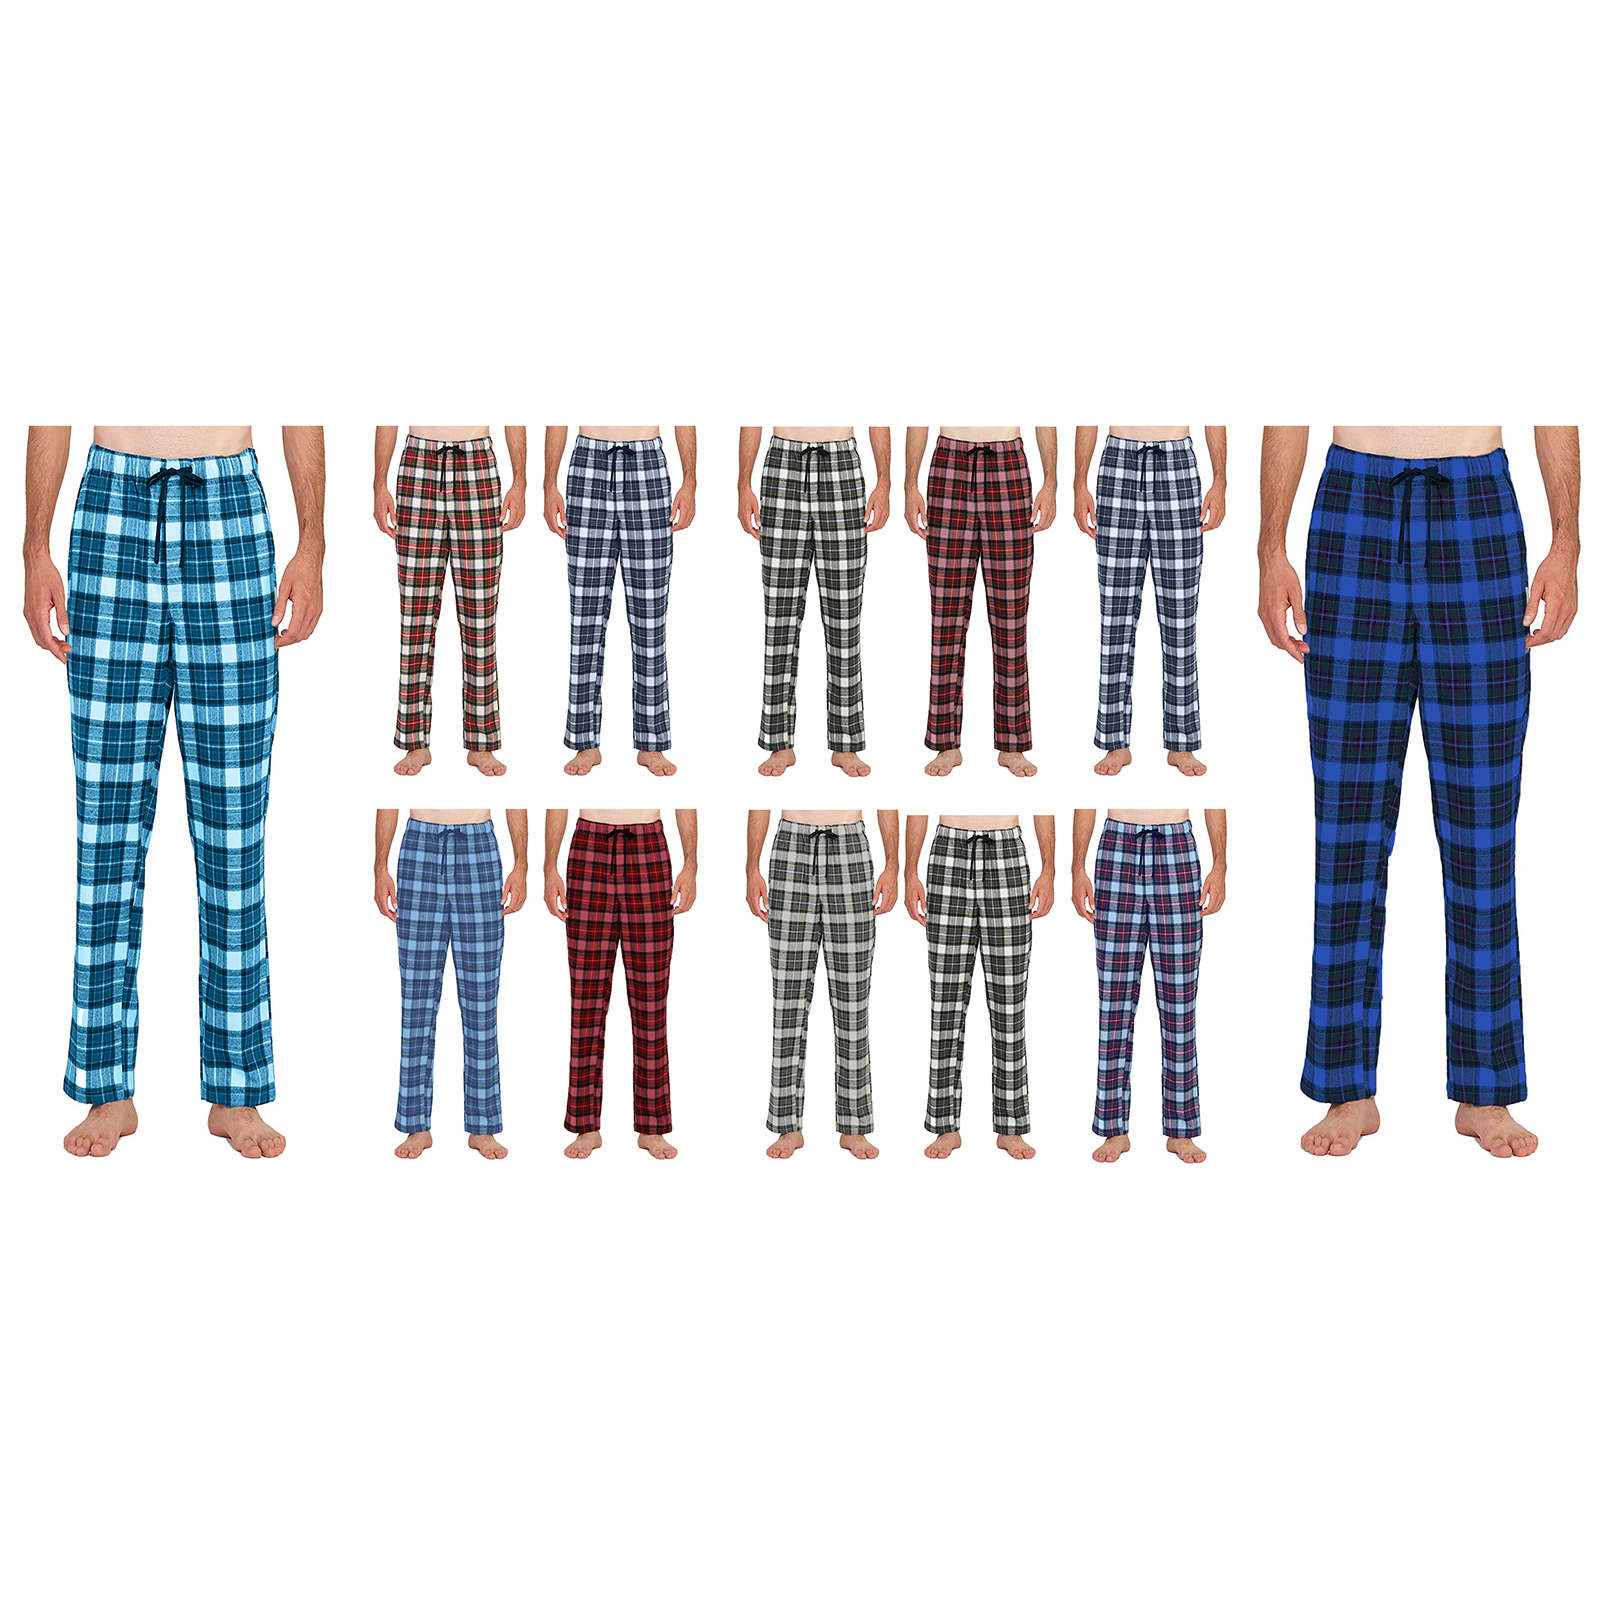 2-Pack: Men's Soft 100% Cotton Flannel Plaid Lounge Pajama Sleep Pants - X-Large